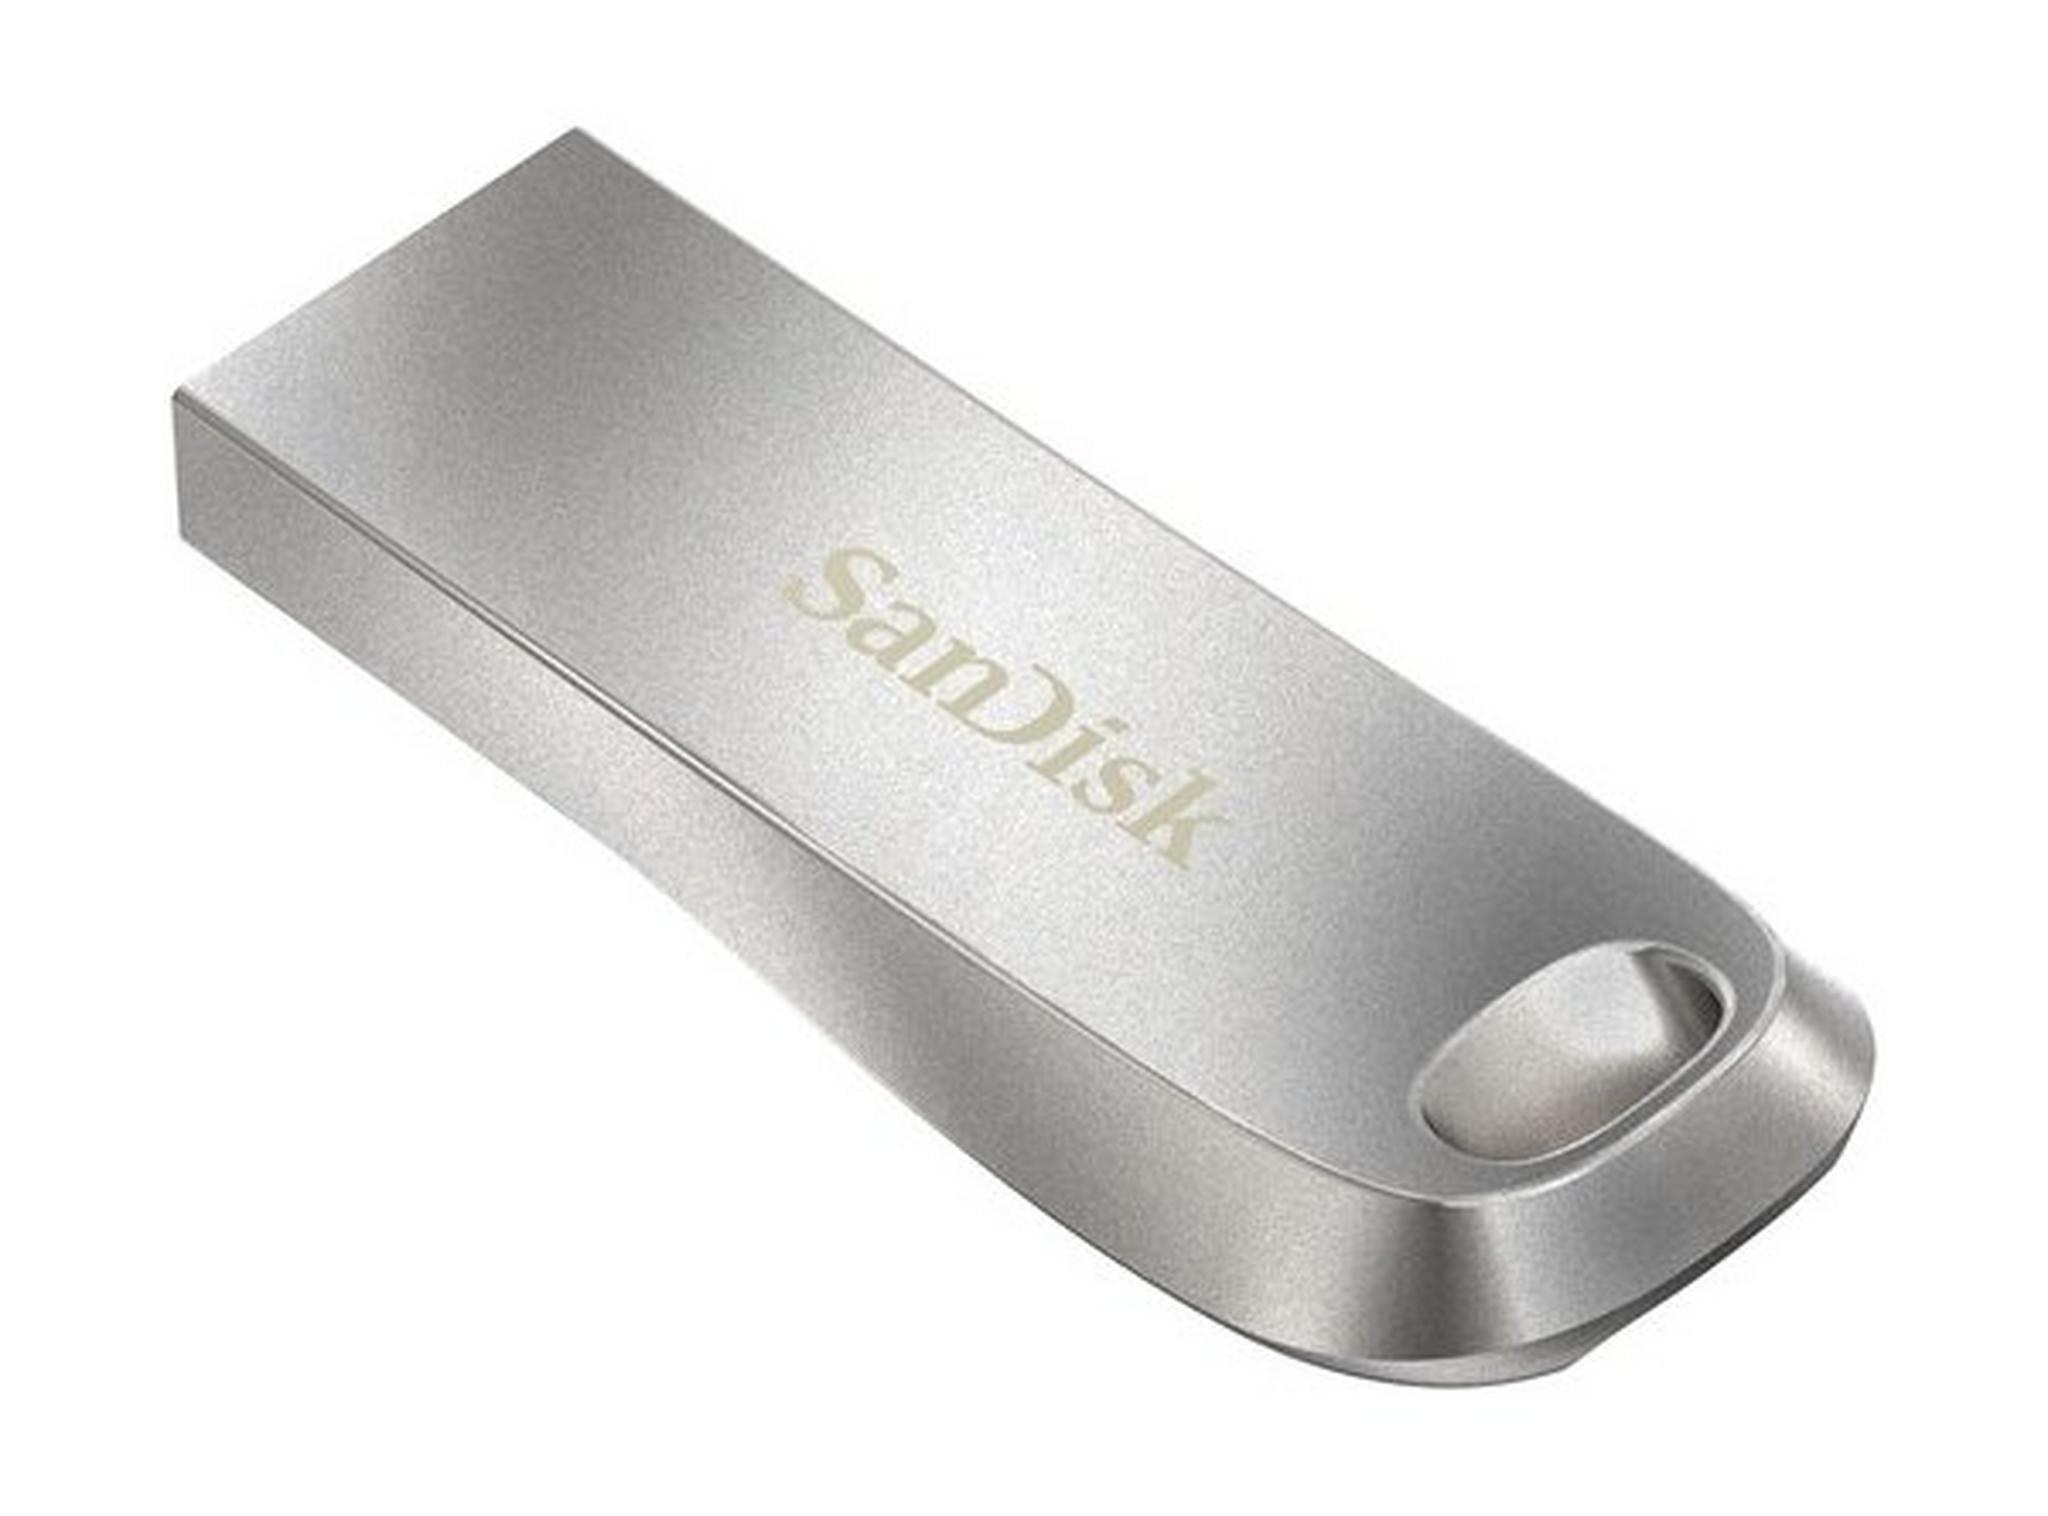 SanDisk 32GB Ultra Luxe USB 3.1 Flash Drive